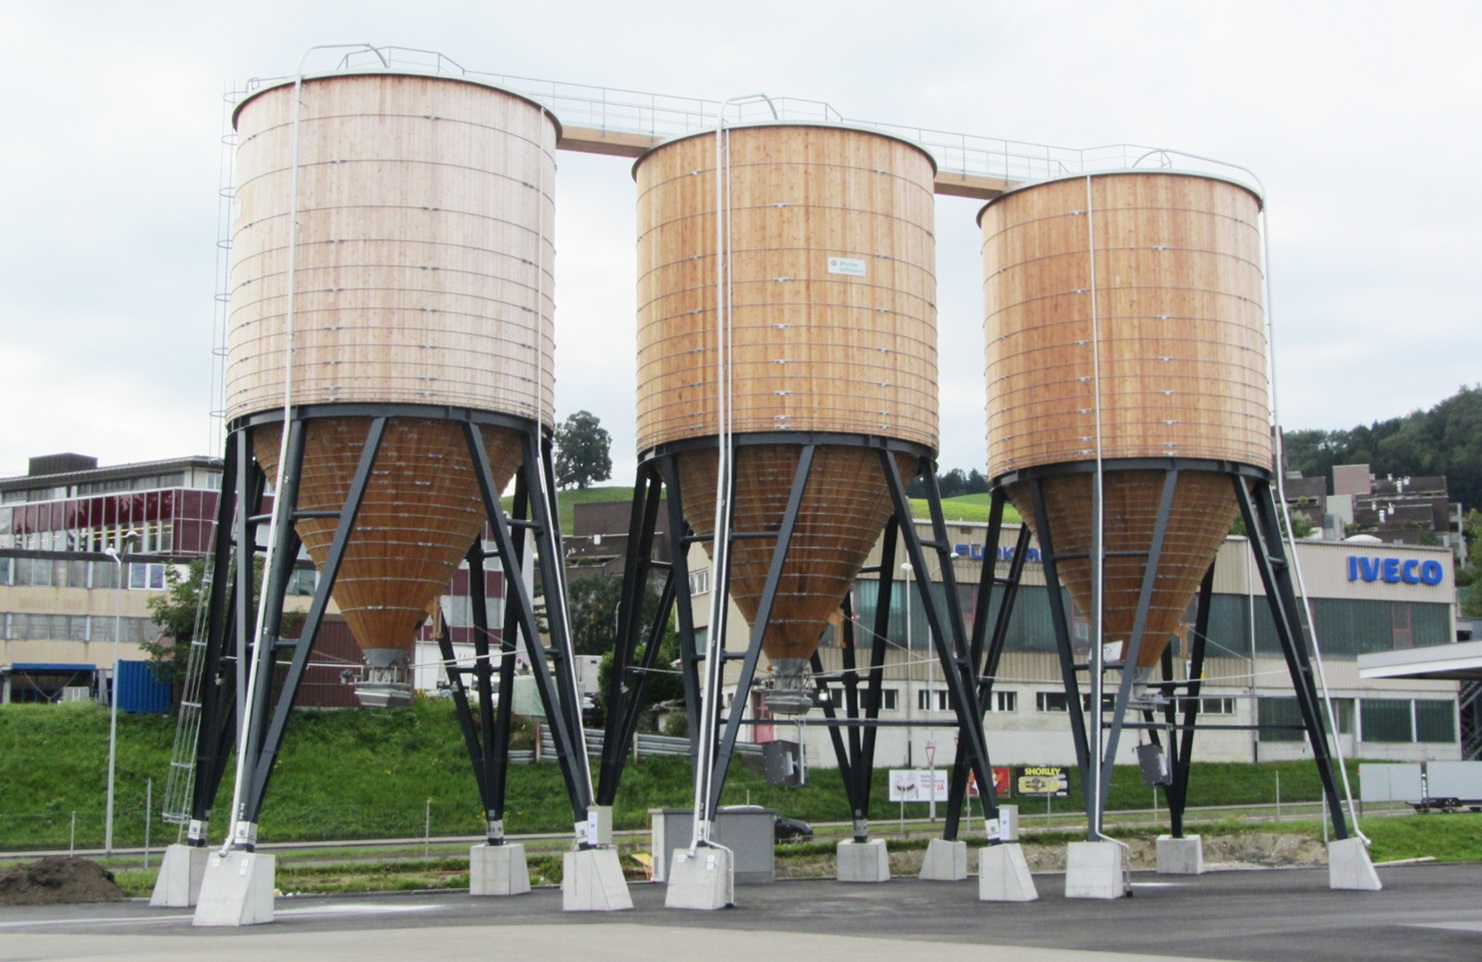 Round large wooden silos with a volume of 400m3 each in St. Gallen Neudorf